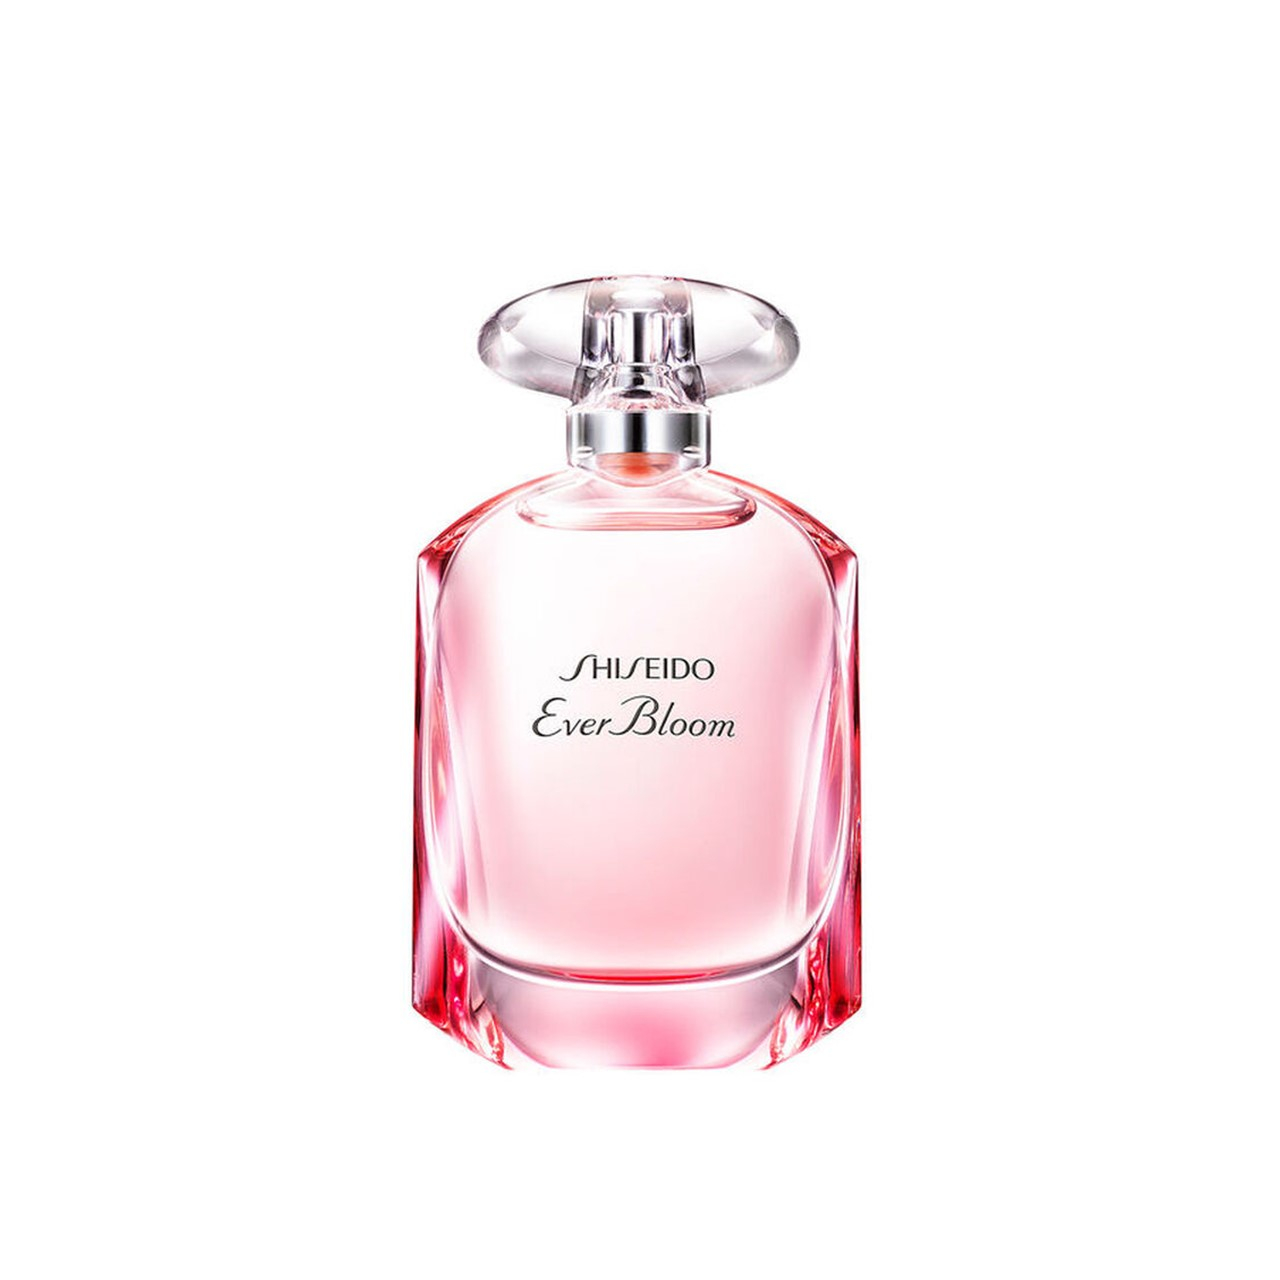 Shiseido Ever Bloom Eau de Parfum 90ml (3.0fl oz)